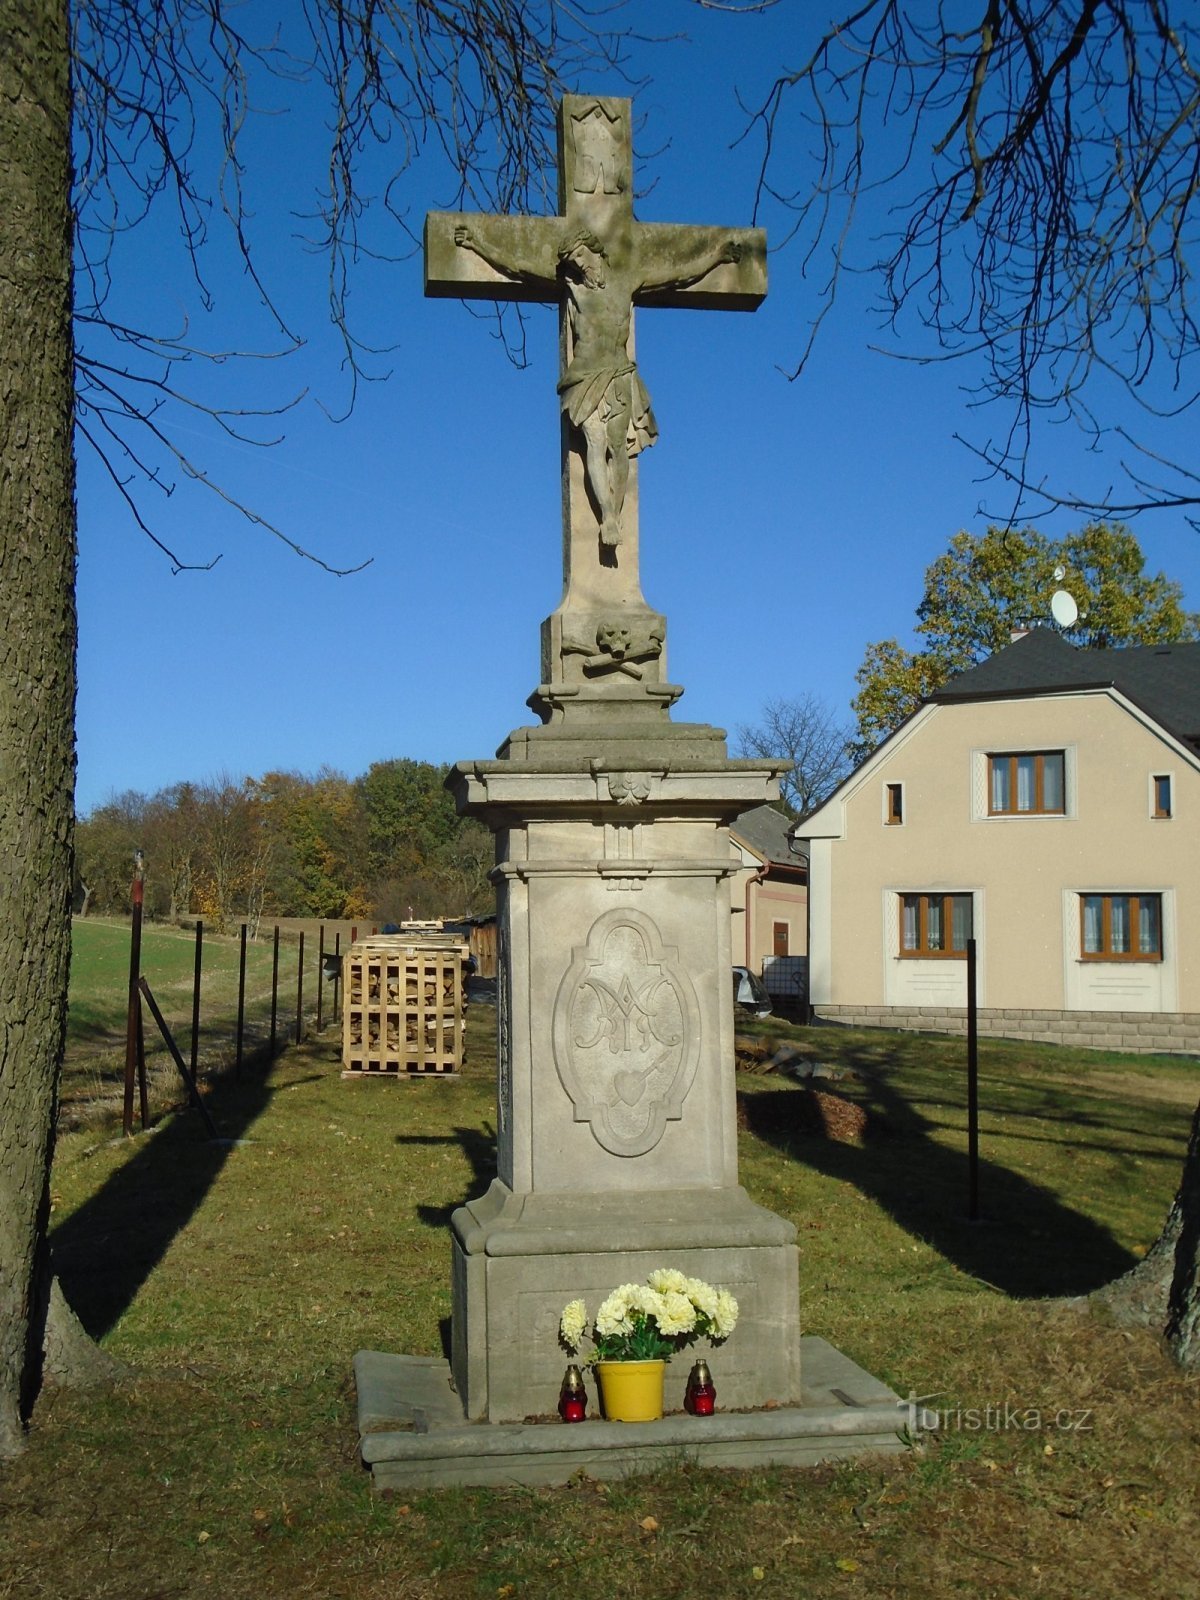 Croix de pierre près du parquet (Slatina nad Úpou, 31.10.2018/XNUMX/XNUMX)